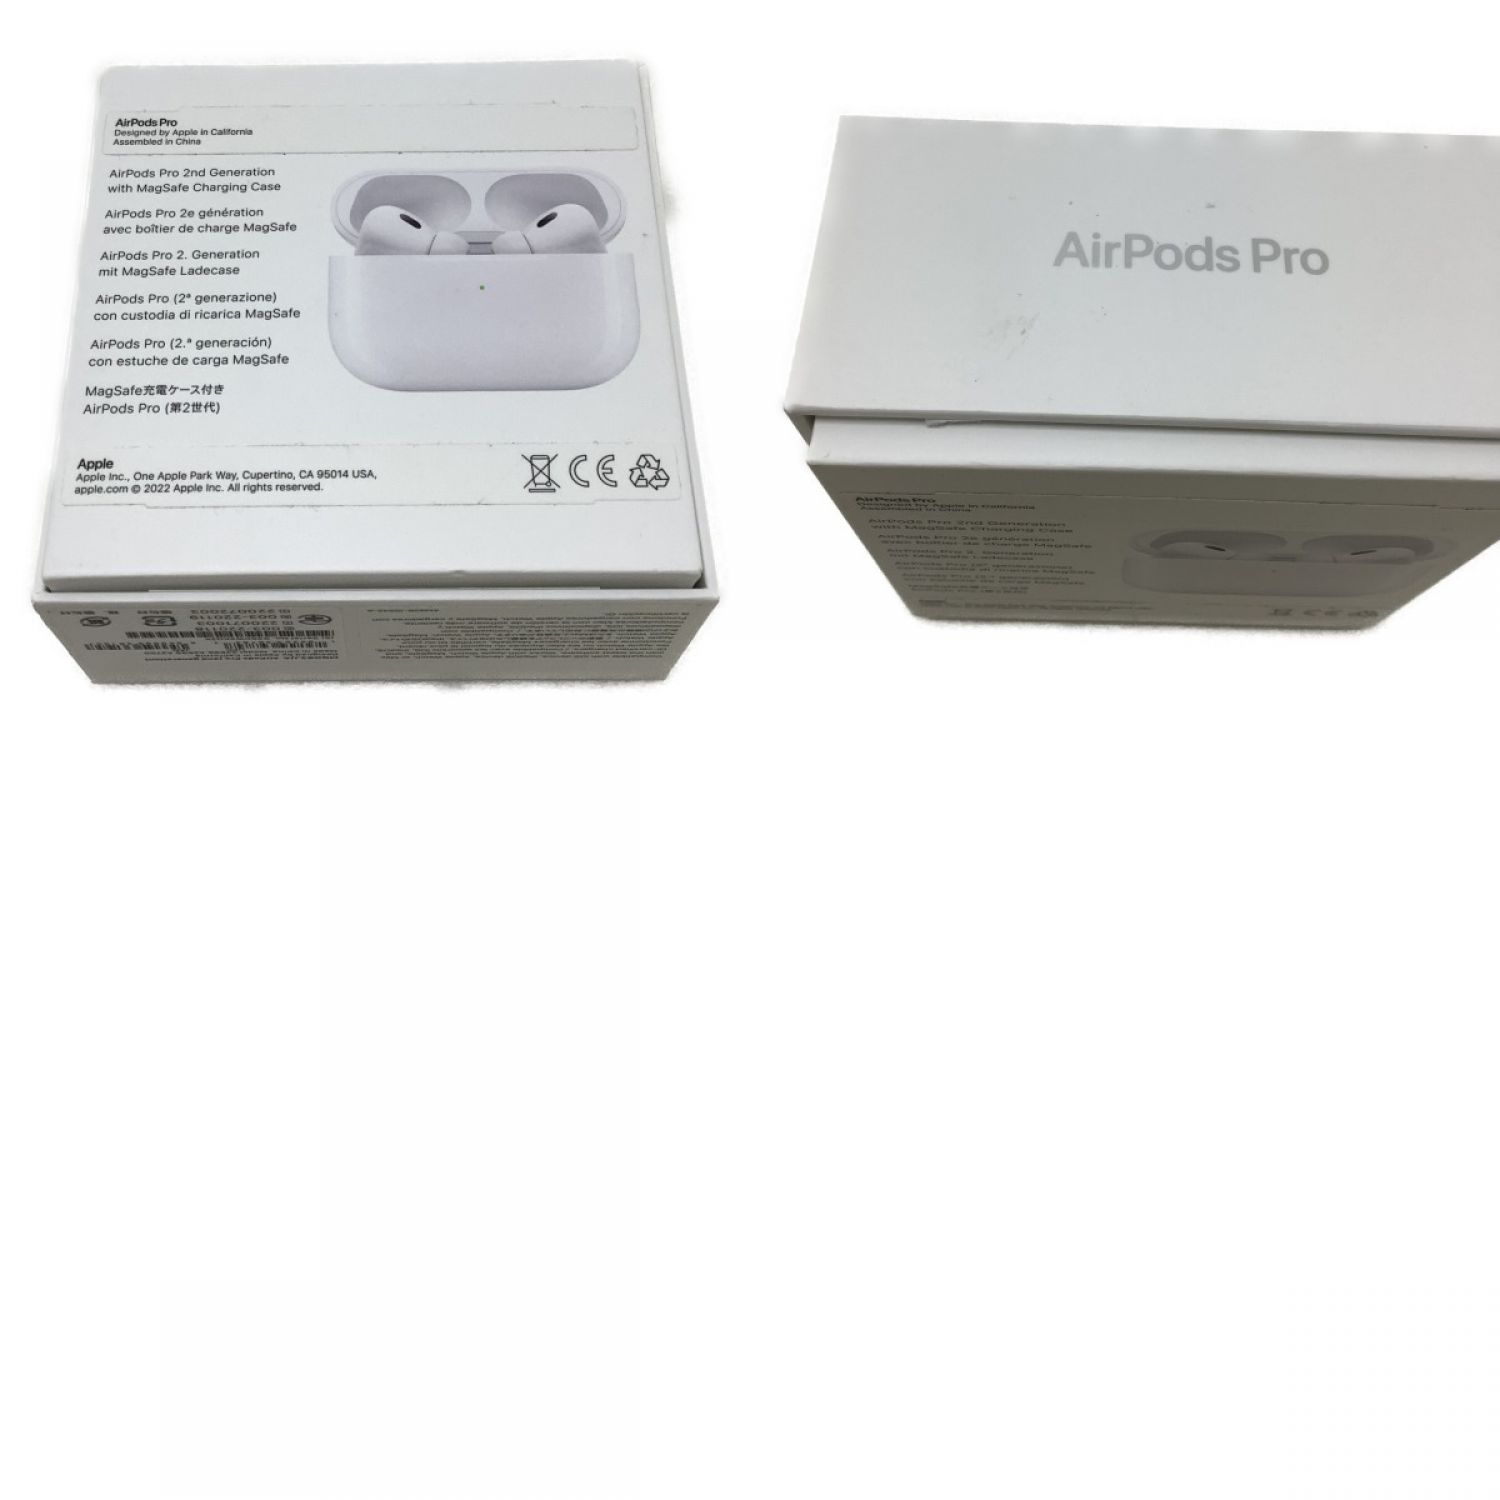 APPLE アップル AirPods with Wireless Chargin